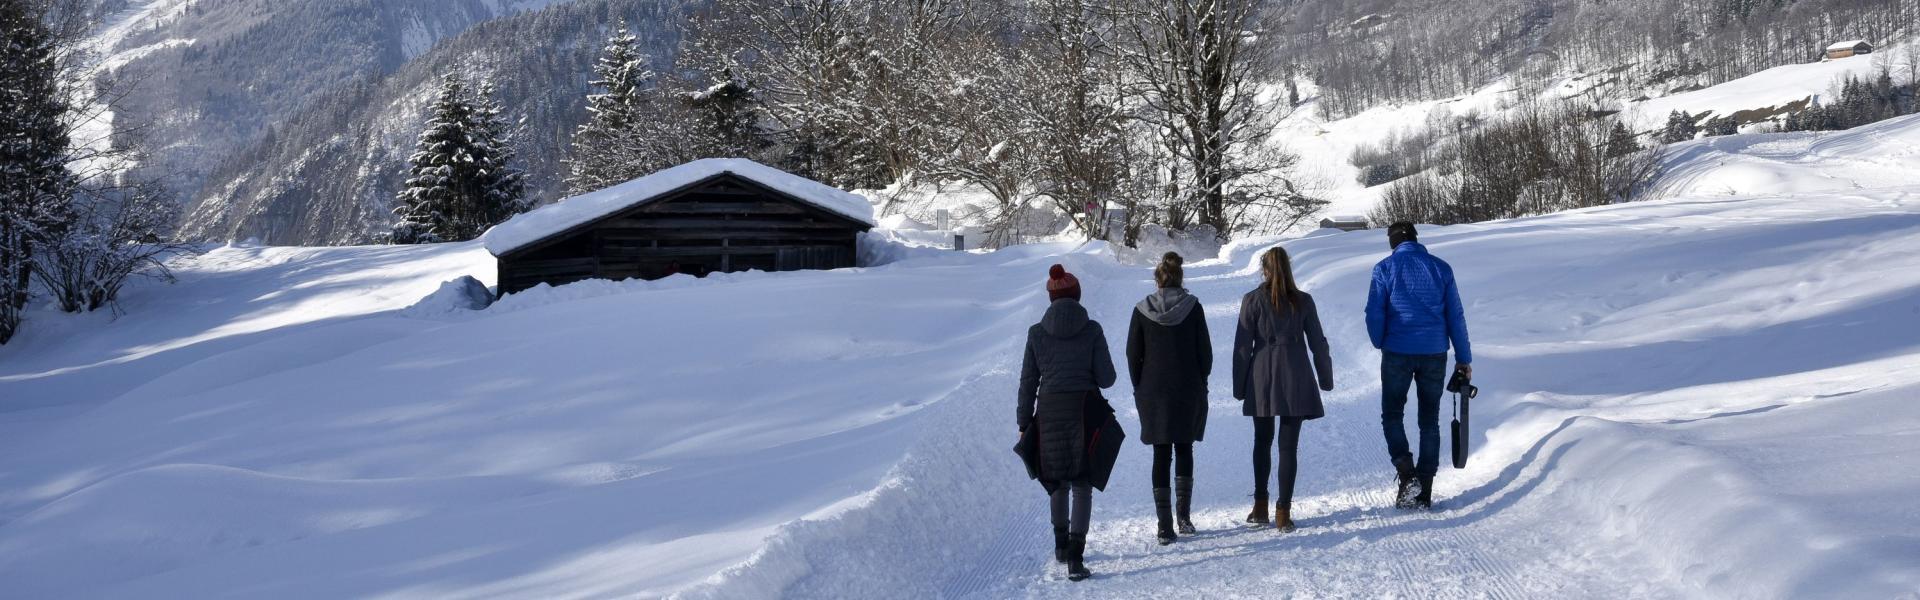 Winterwandern in Au-schoppernau